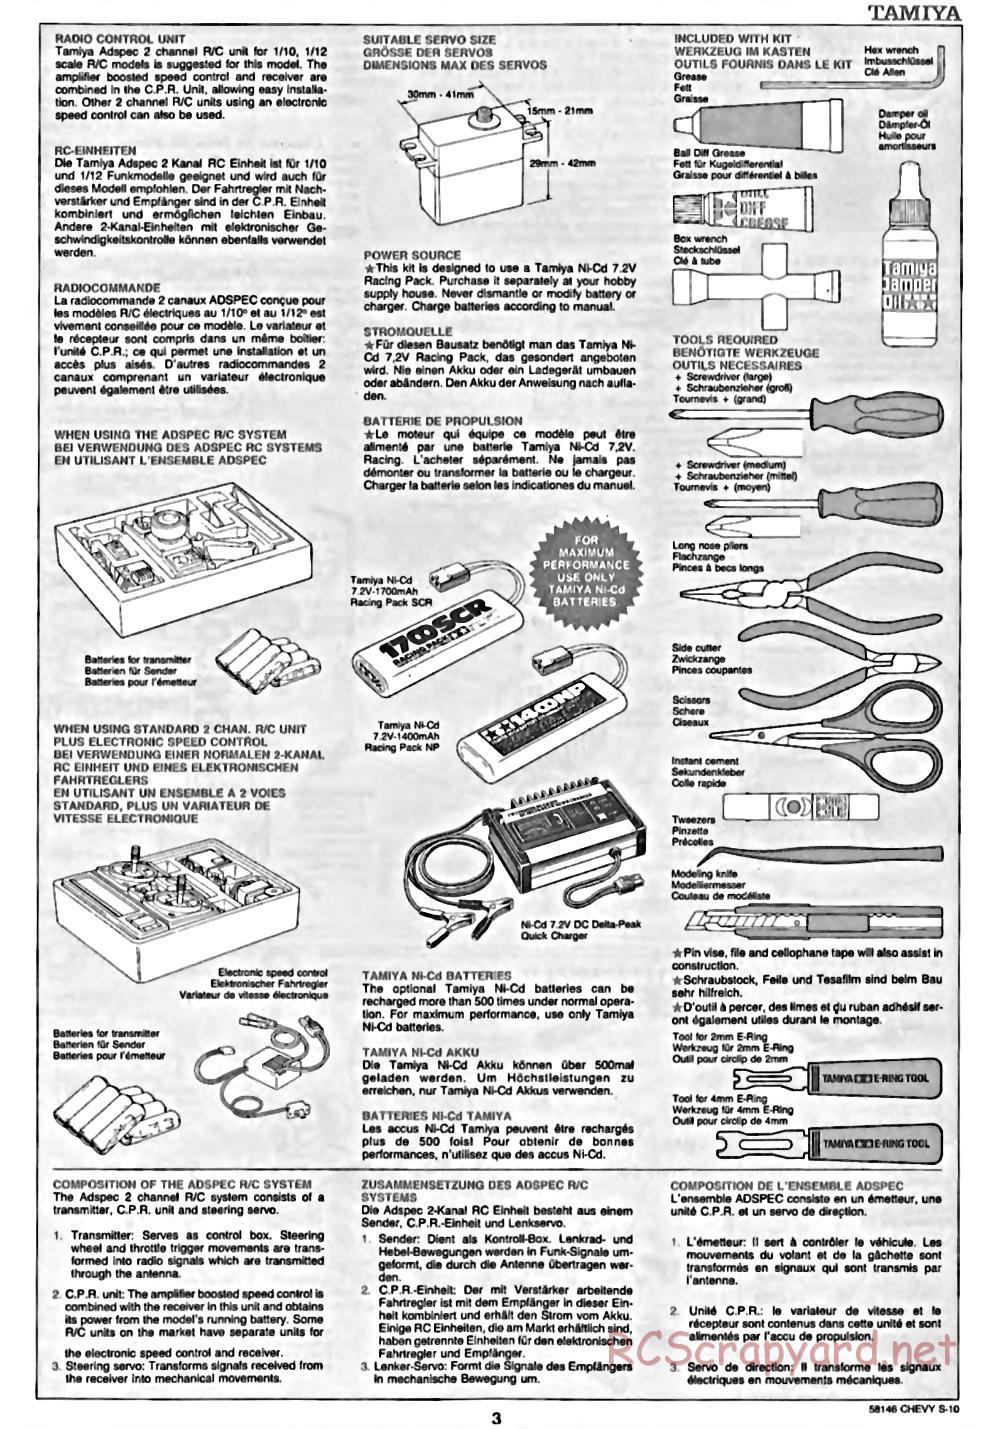 Tamiya - Chevy S-10 Chassis - Manual - Page 3